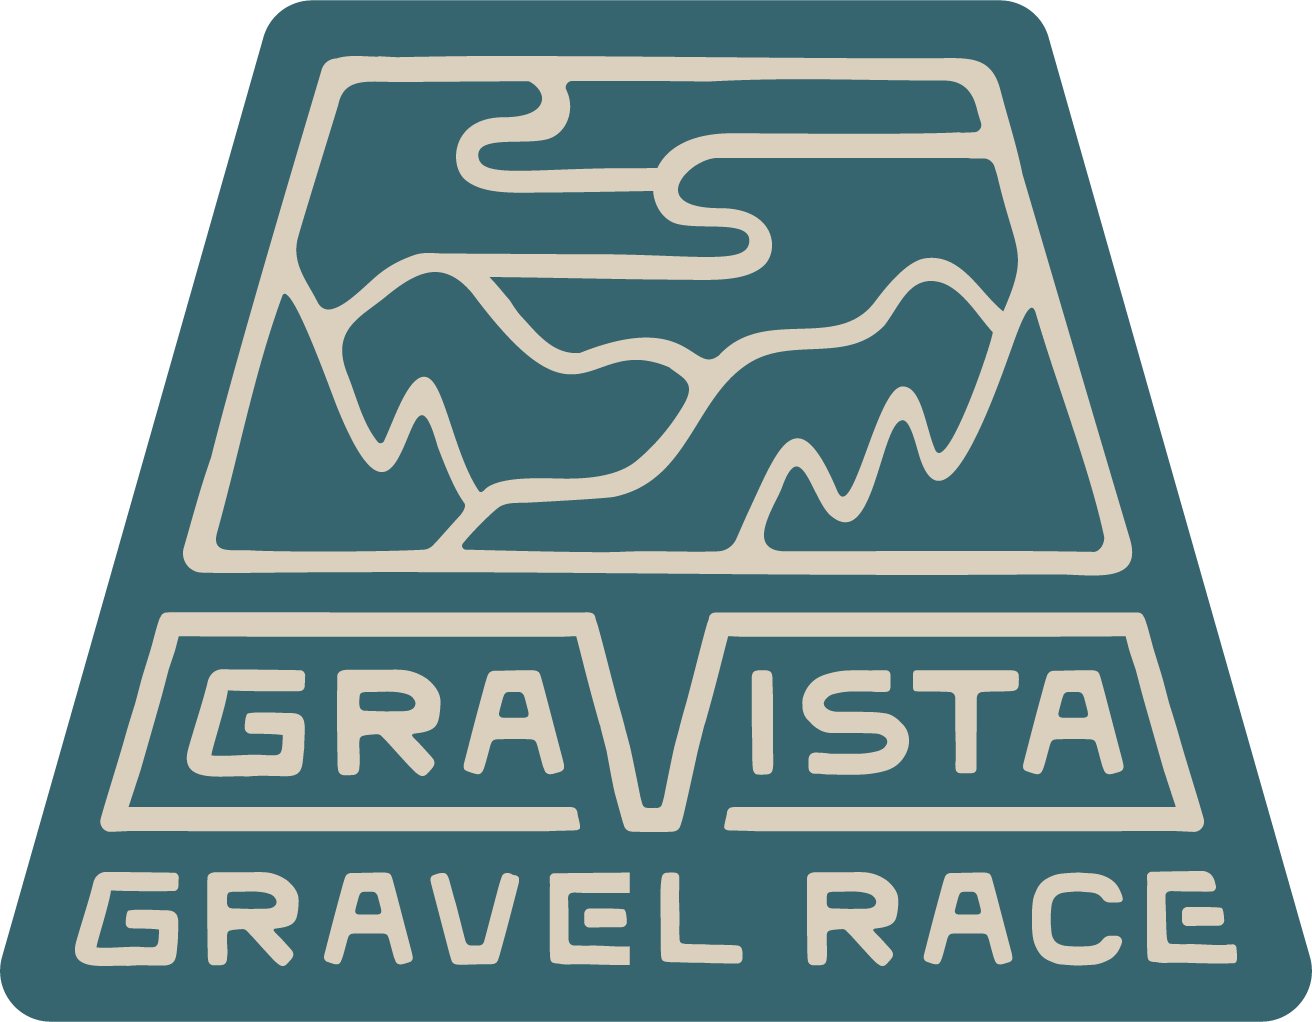 Ride Gravista